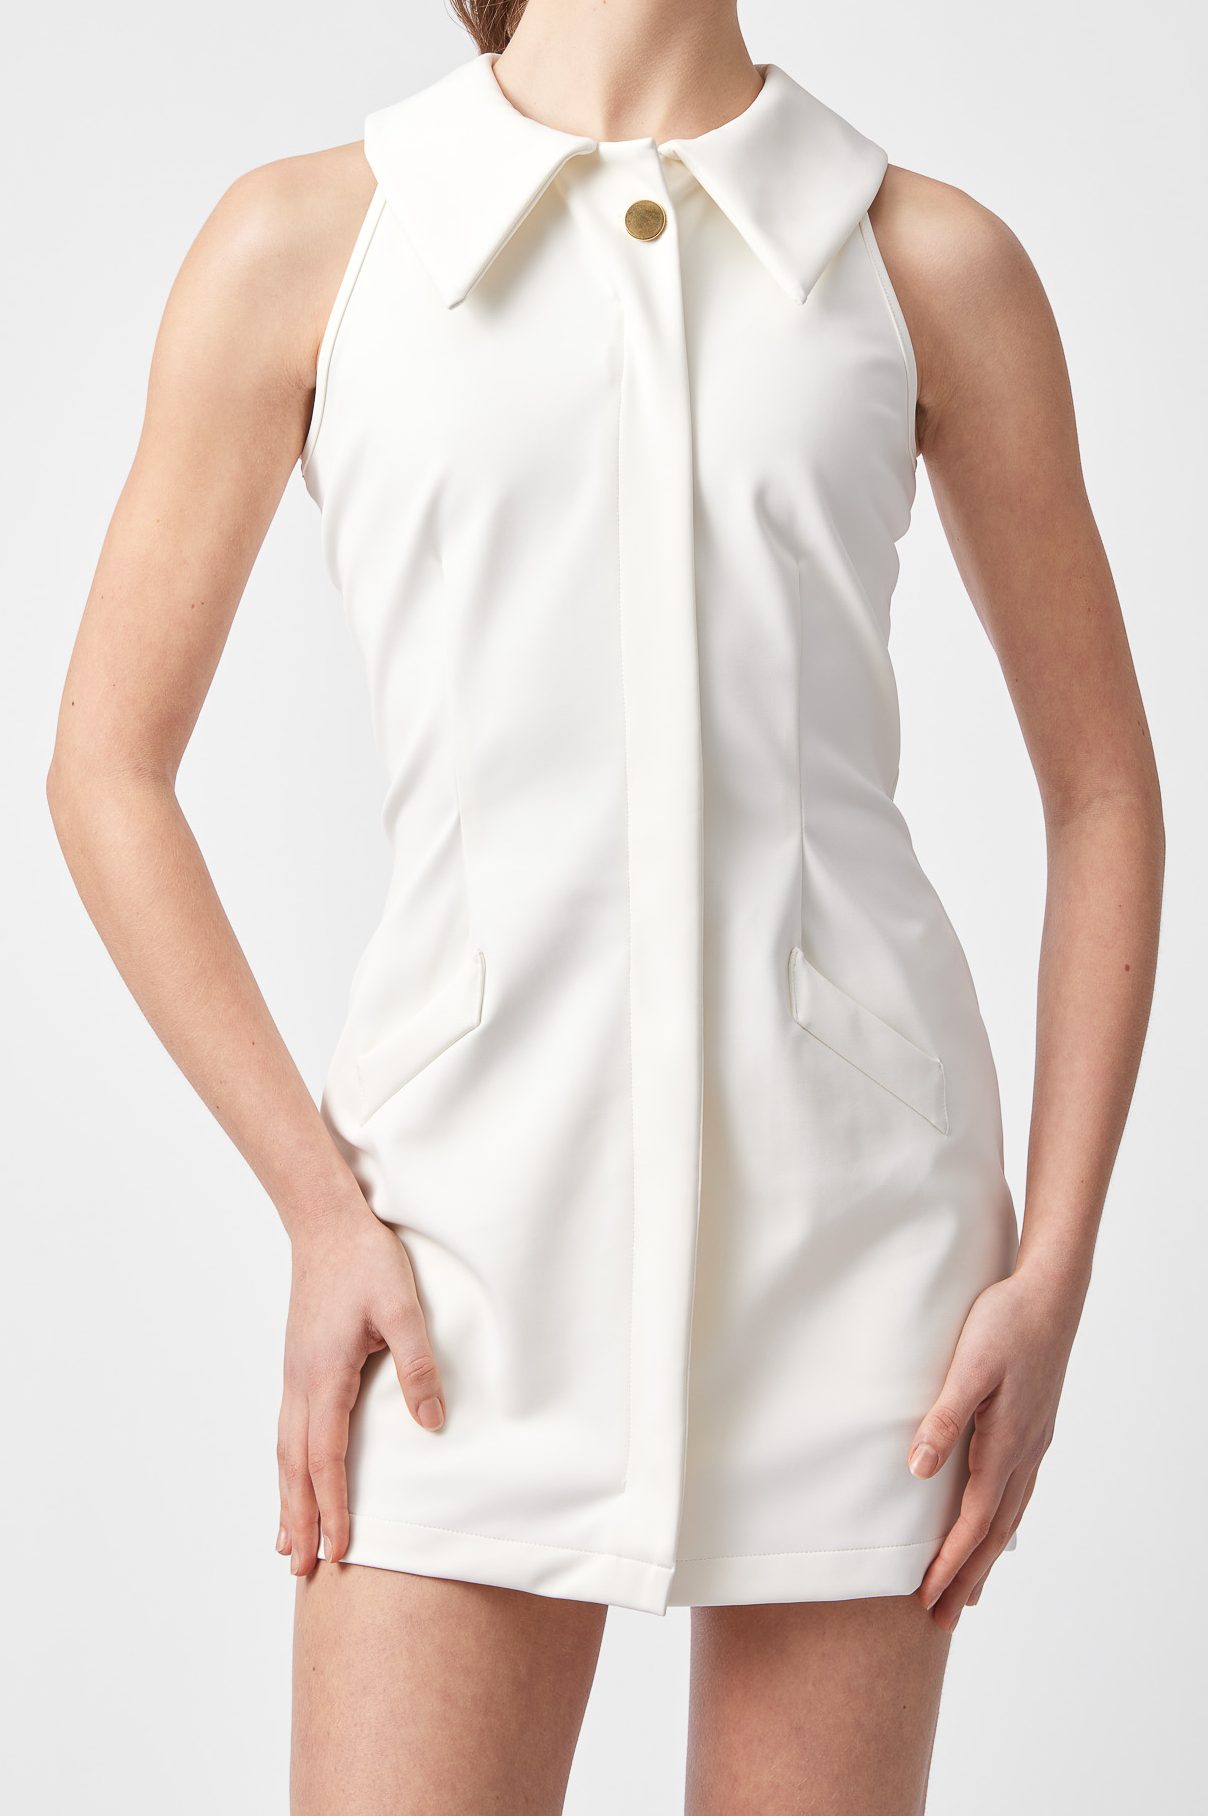 women's white dress made by oceanform